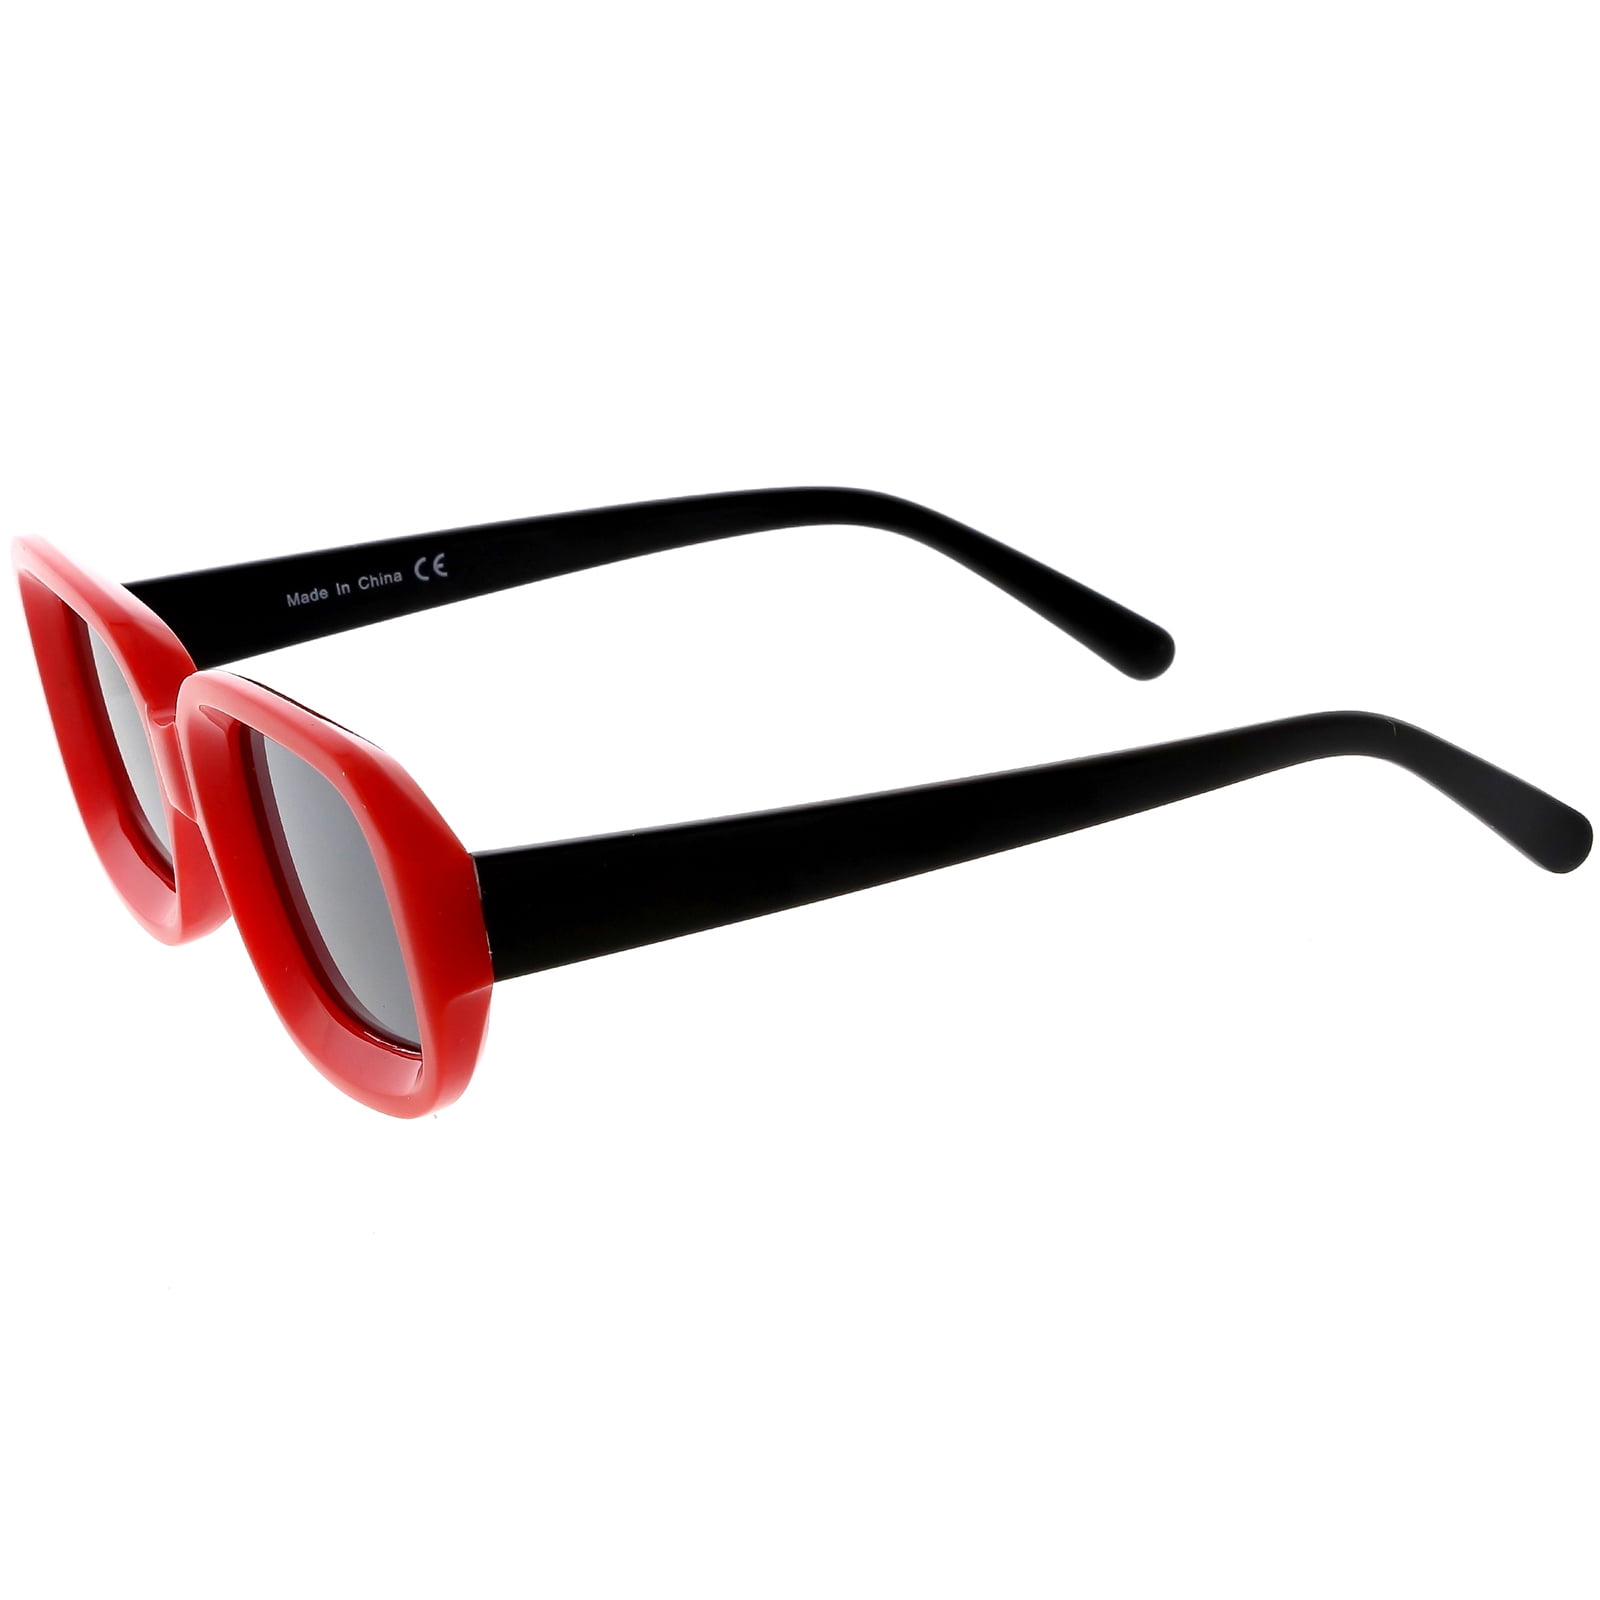  Armear Small Metal Frame Square Sunglasses Non Polarized Lens  (Black/smoke, 50) : Clothing, Shoes & Jewelry